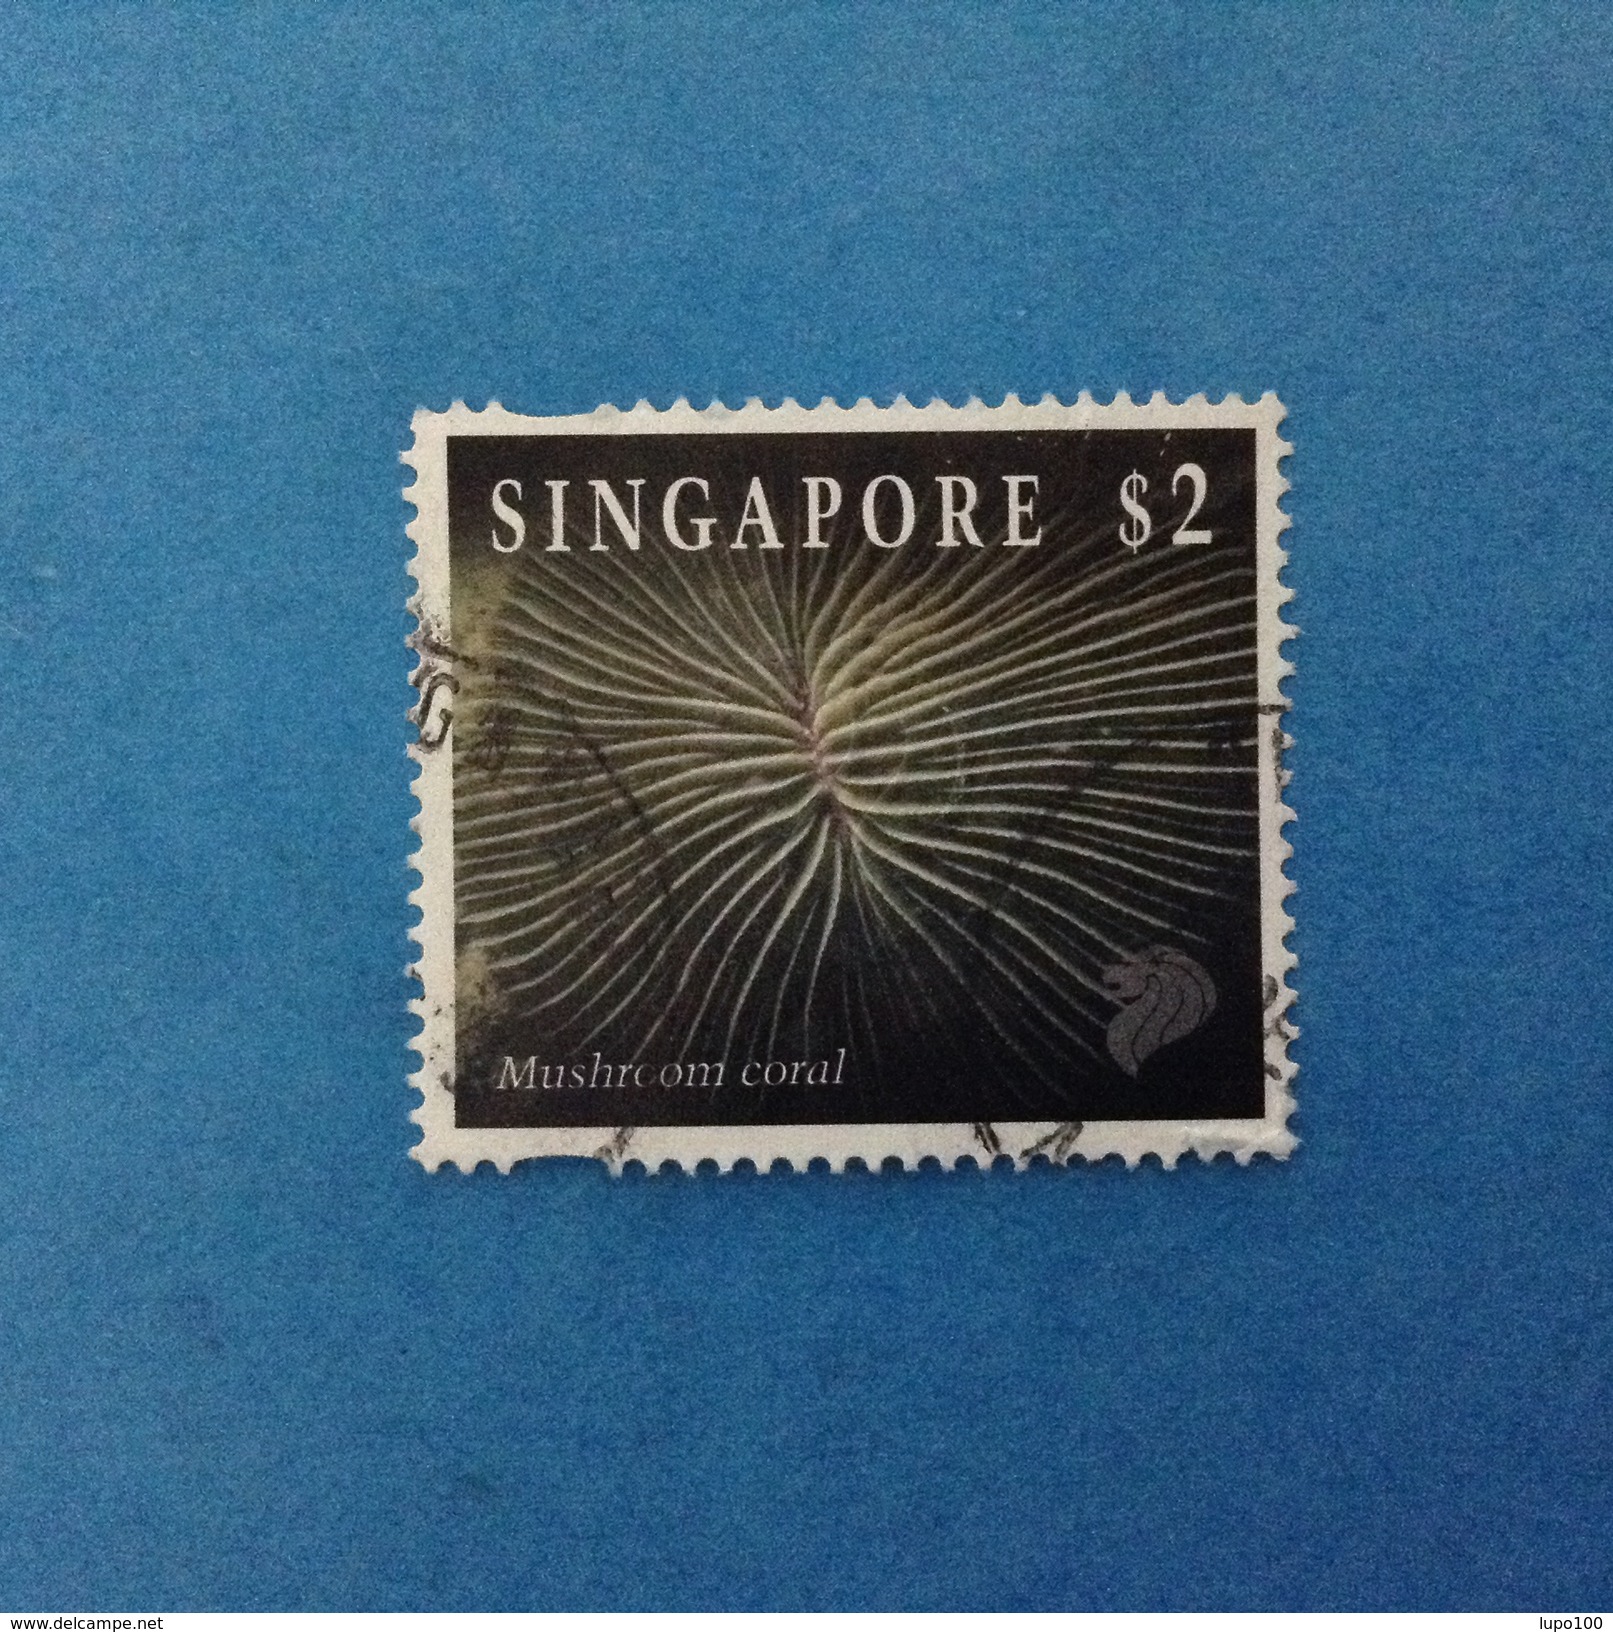 1994 SINGAPORE FRANCOBOLLO USATO STAMP USED - CORALLO MUSHROOM CORAL 2 - Singapore (1959-...)